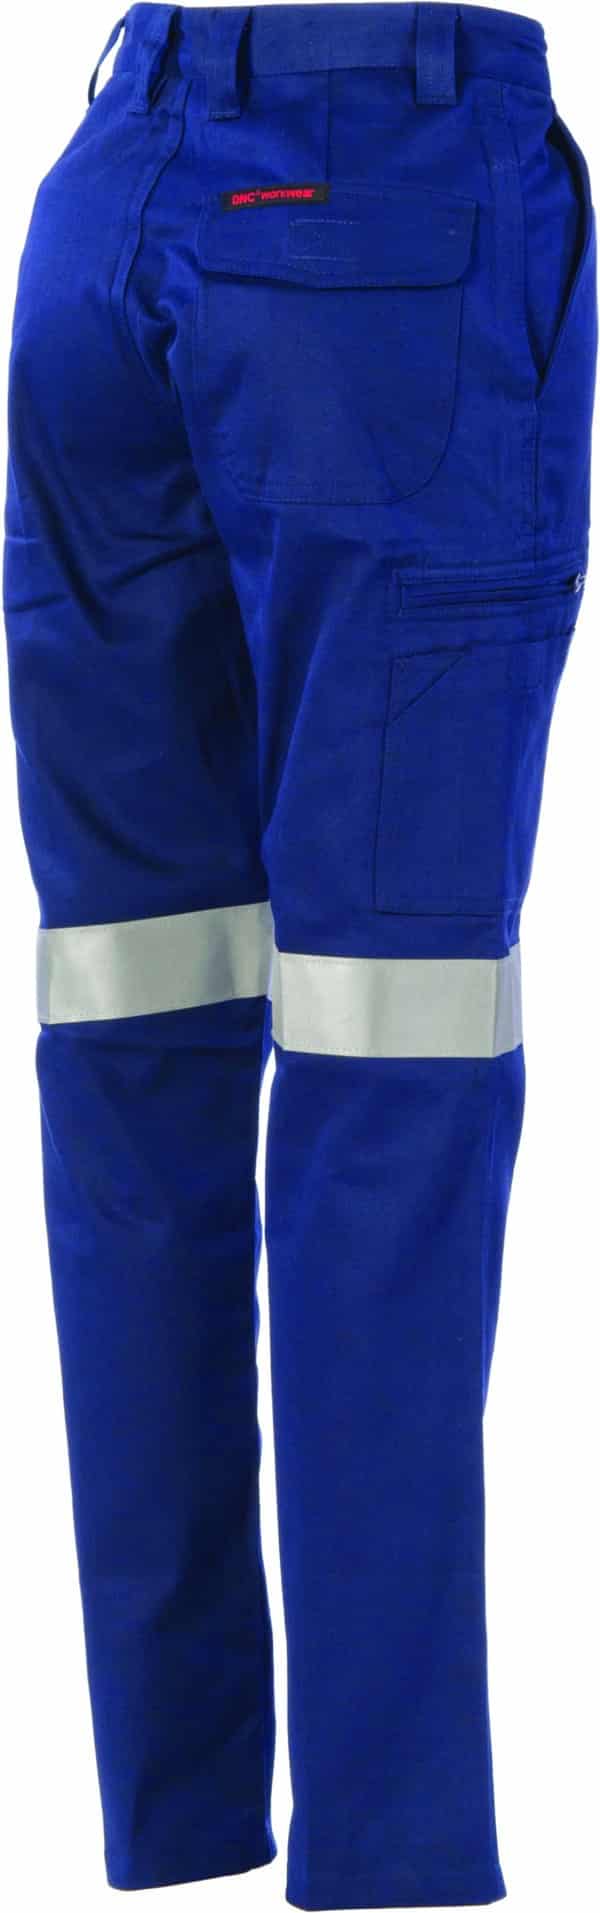 DNC Workwear Ladies Digga Cool-Breeze Cargo Taped Pants